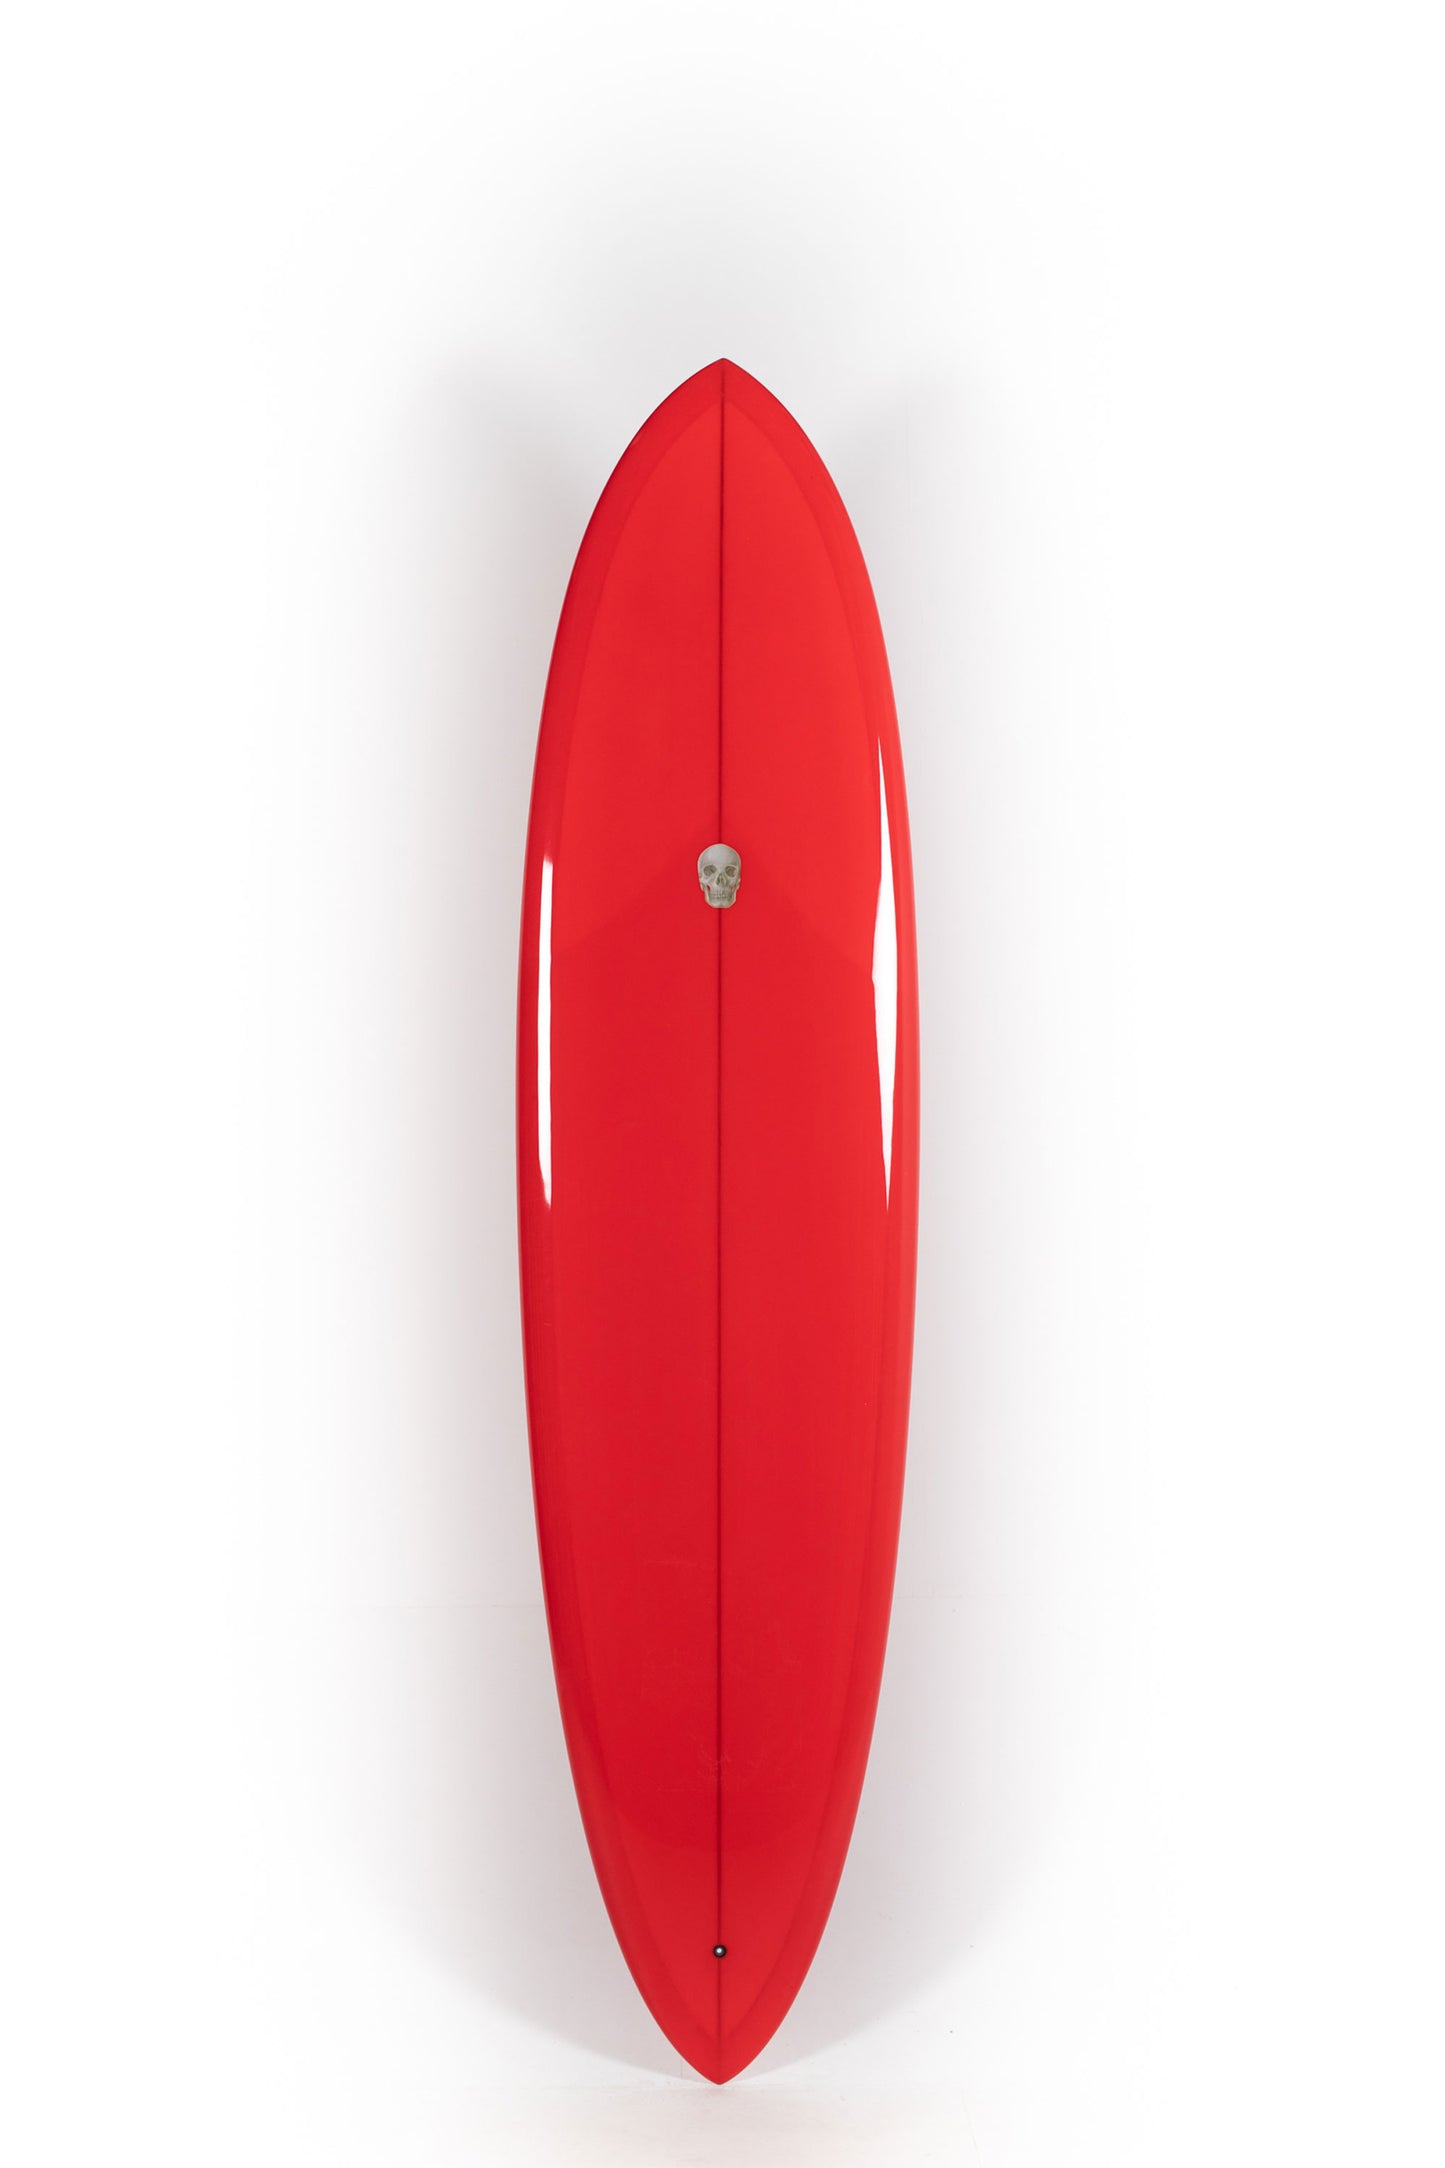 Pukas Surf Shop - Christenson Surfboards - C-BUCKET - 7'6" x 21 1/4 x 2 3/4 - CX04677